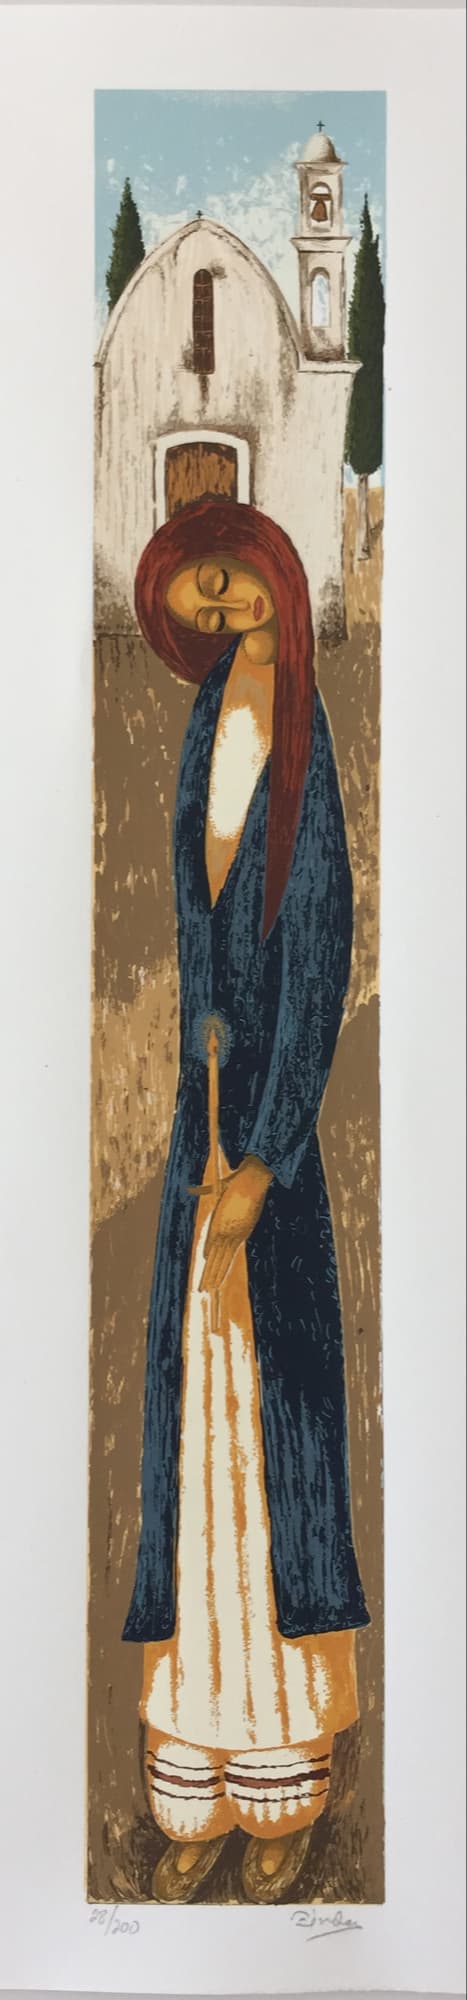 Hatzisotireiou Xanthos, Figure - Part of triptych, Silkscreen print, 75 x 19 cm